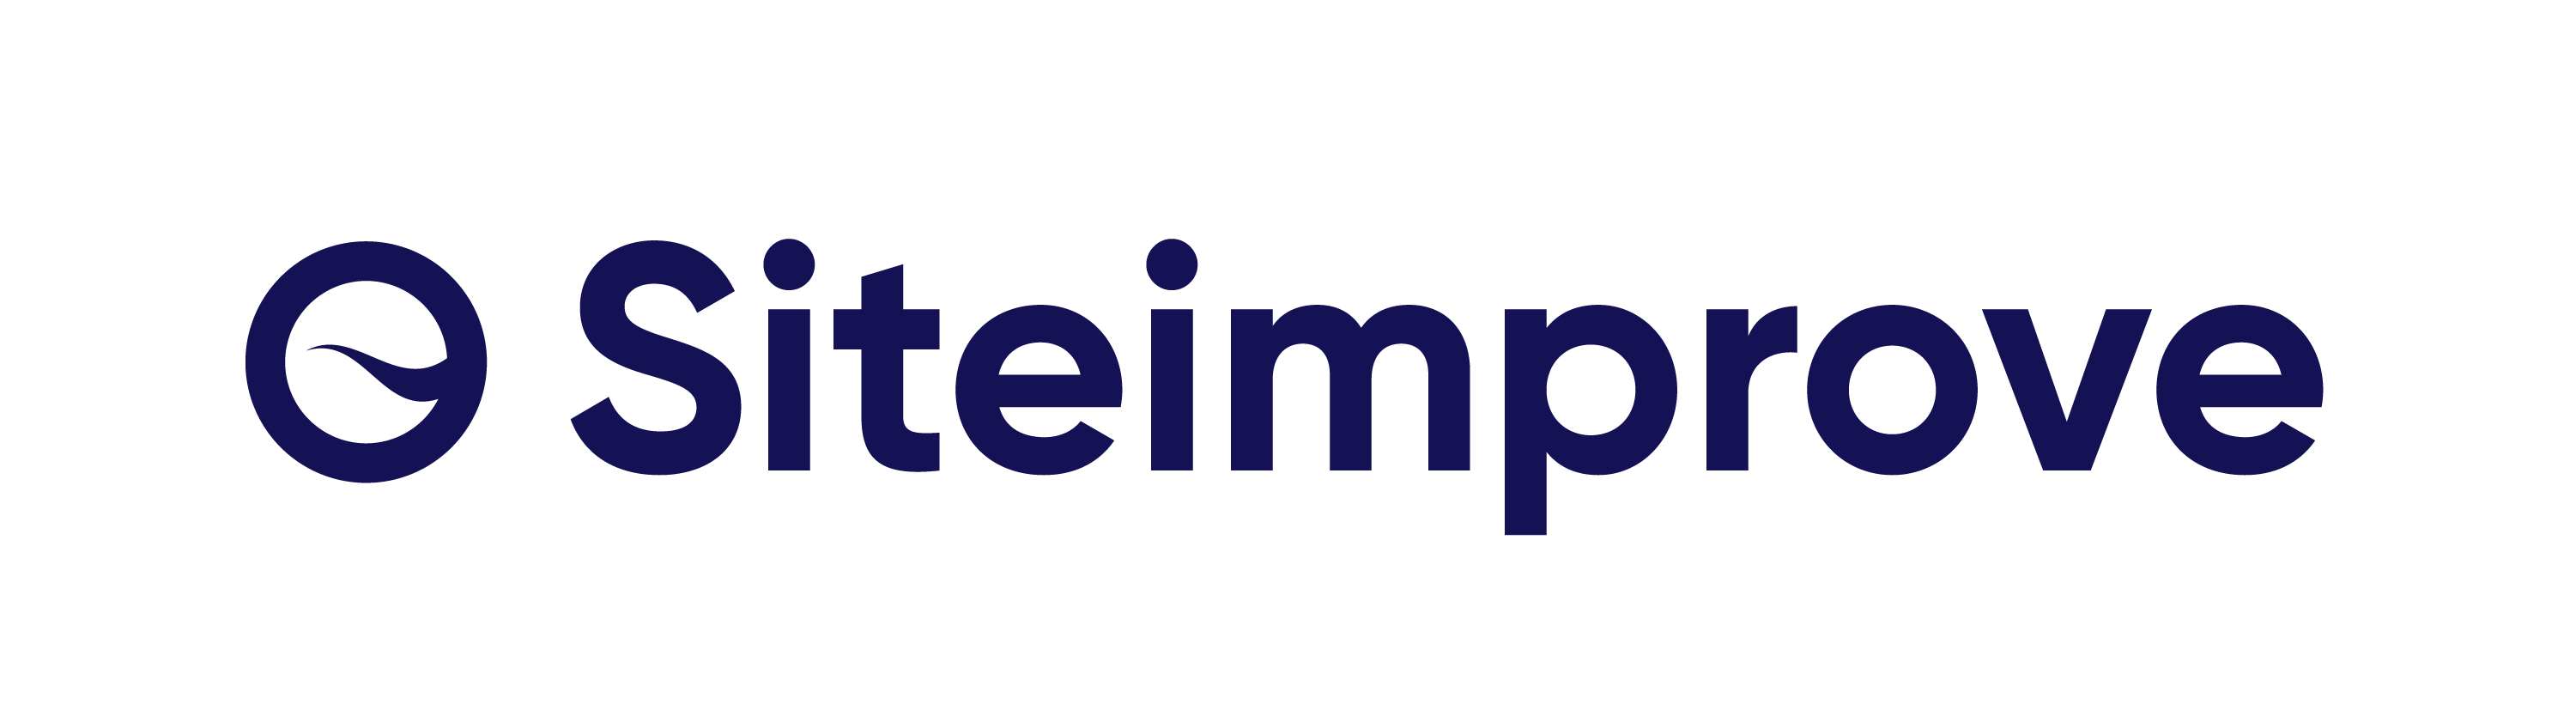 siteimprove_logo_2020 (2)